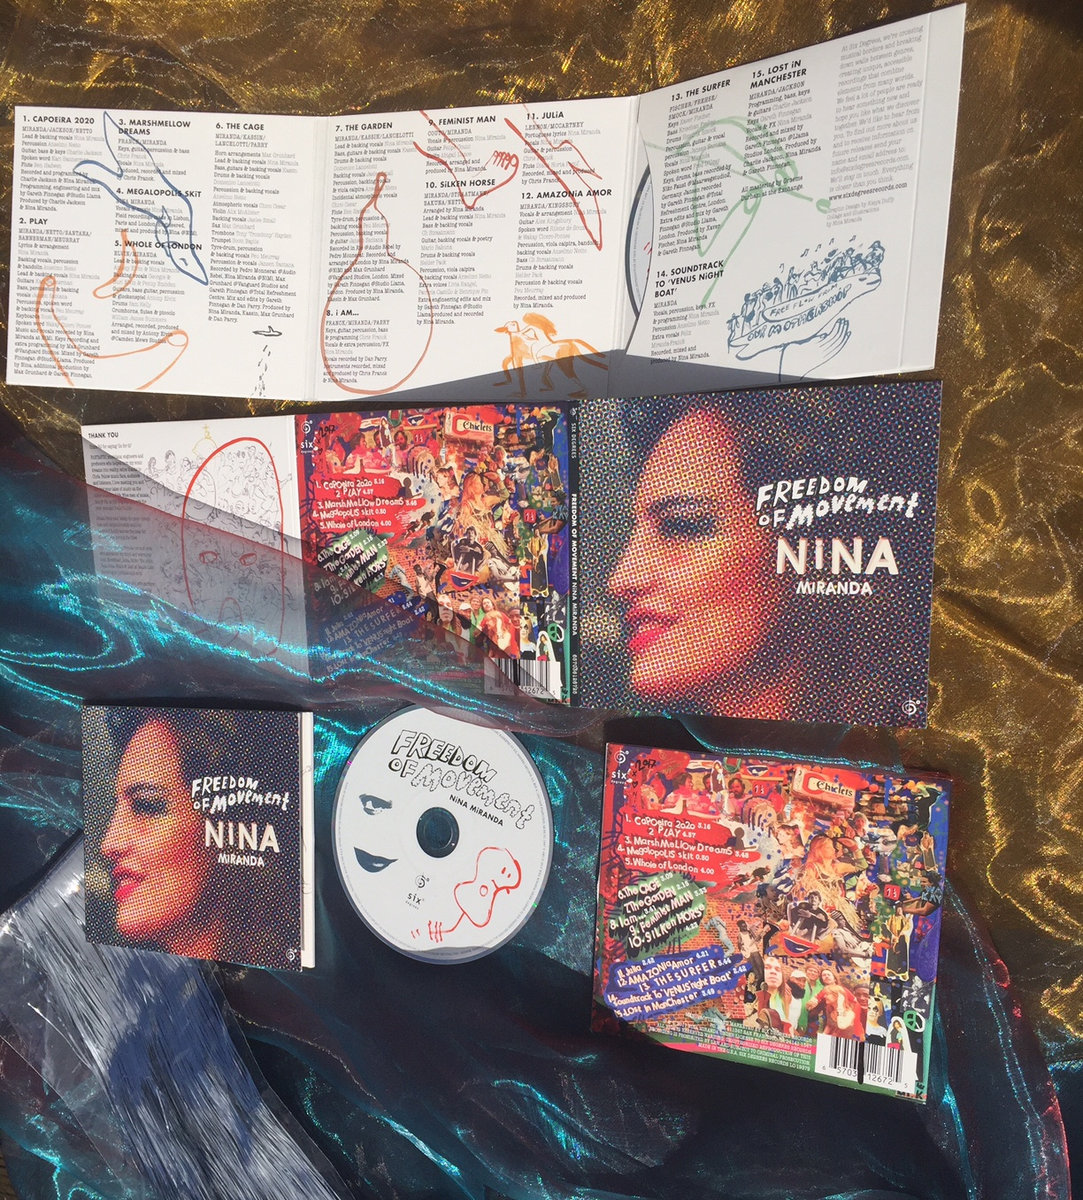 Nina Miranda: Whole of London (single) out now